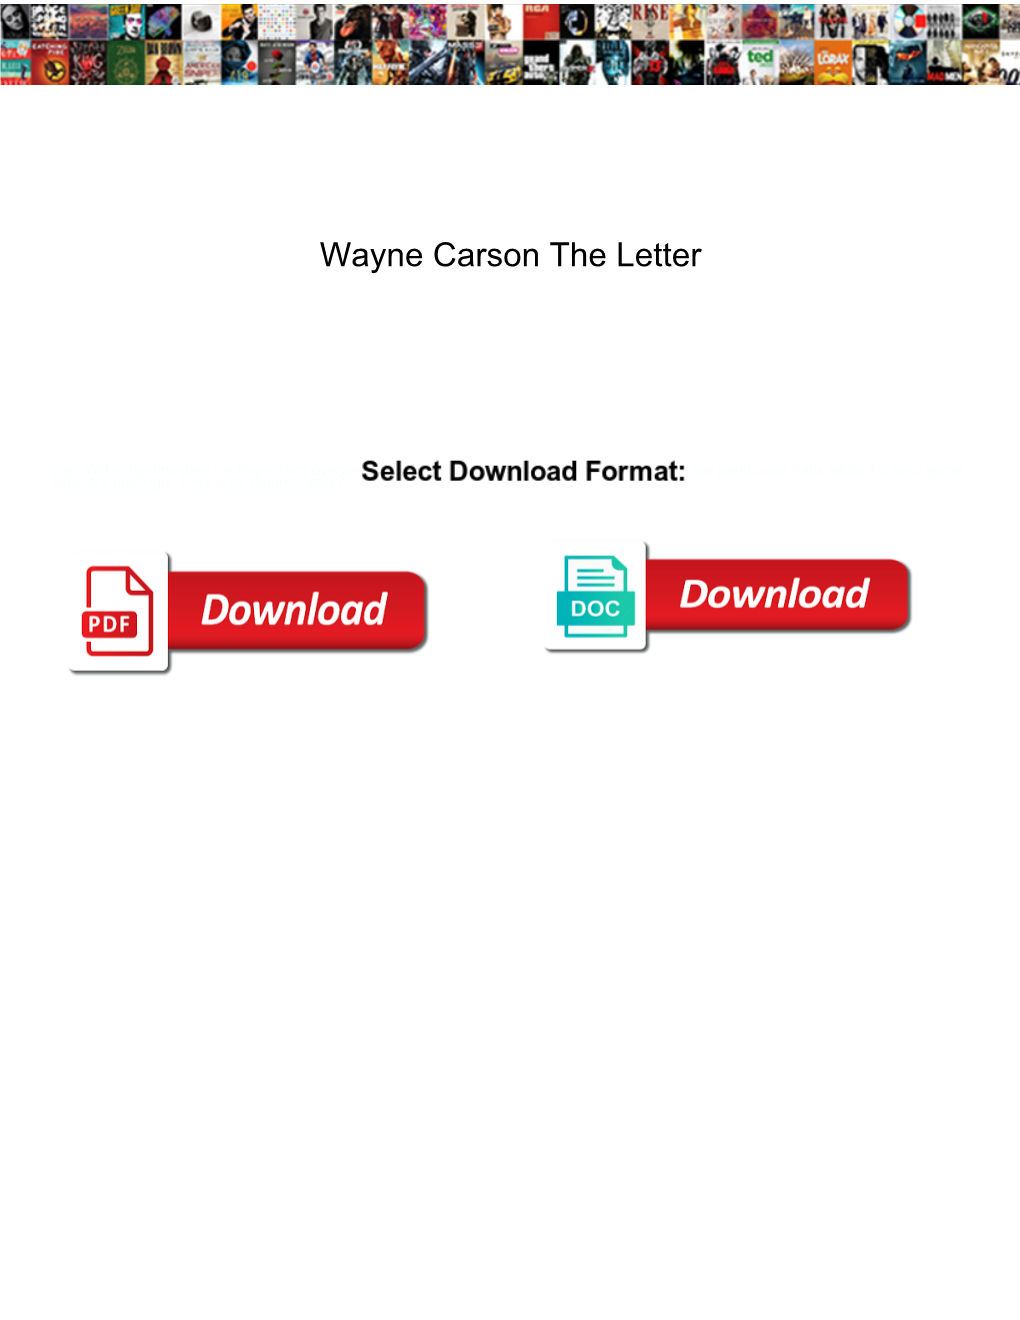 Wayne Carson the Letter